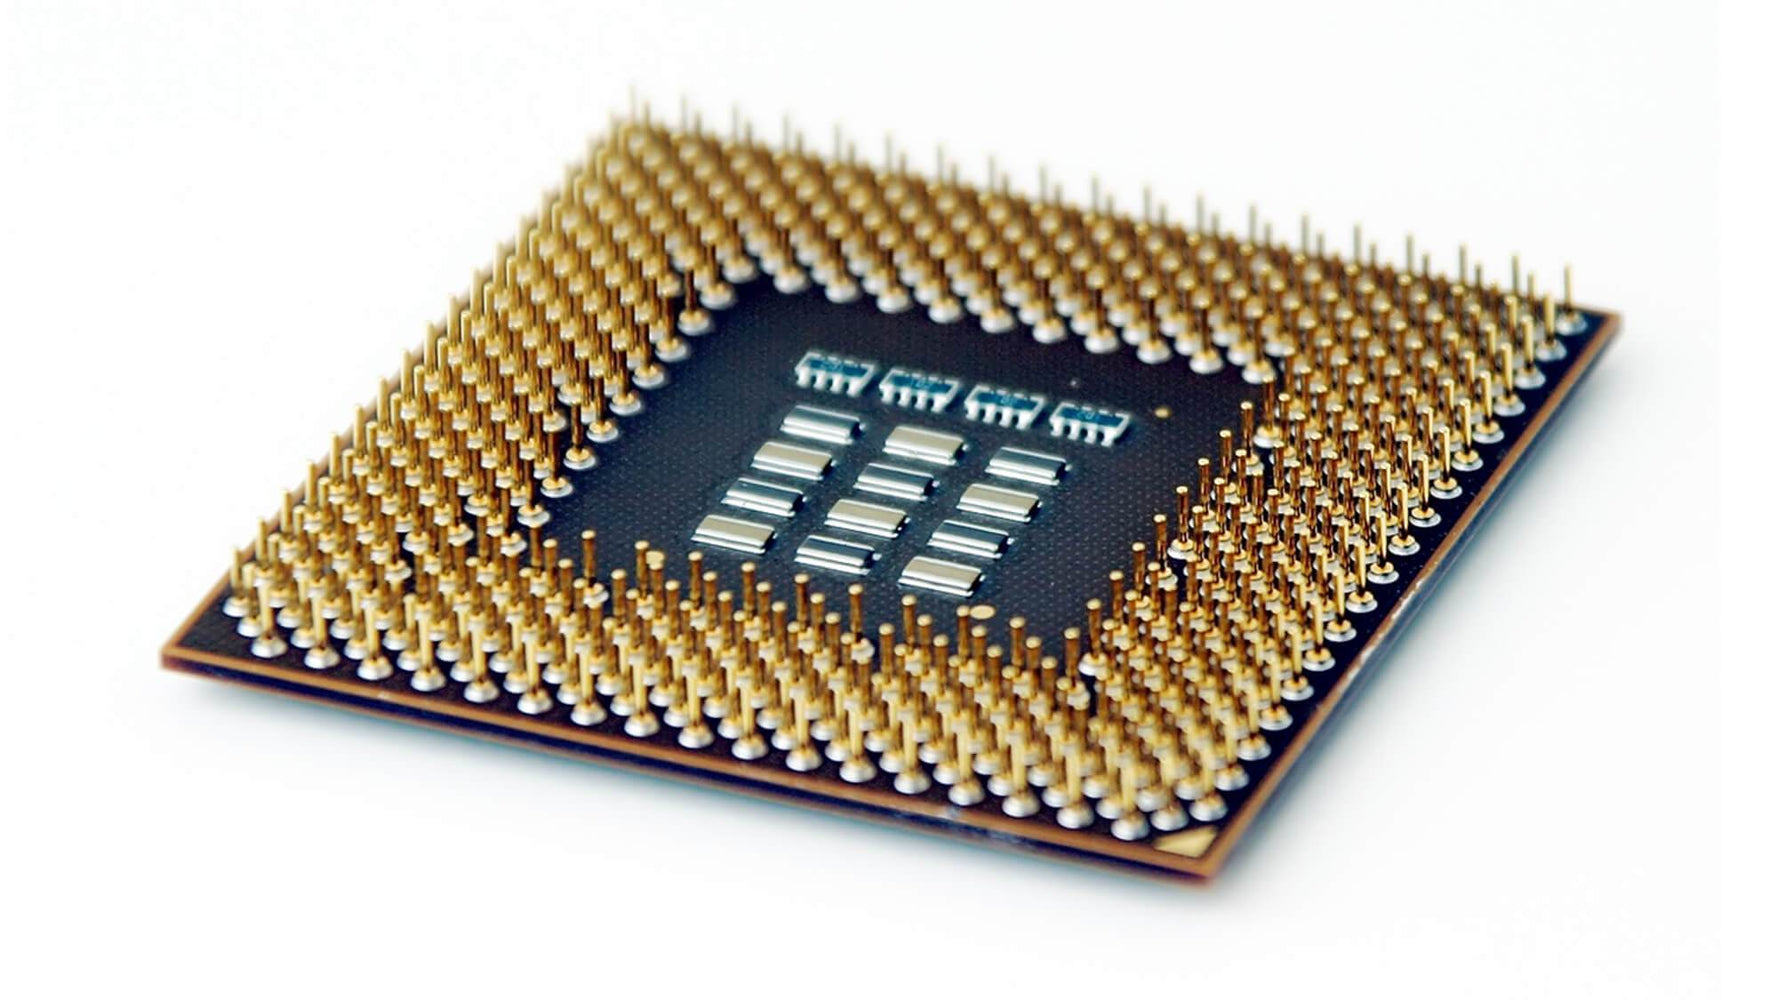 766373-B21 - HP Intel Xeon 10-Core E5-2660v3 2.60GHz 25MB L3 Cache 9.6GT/s QPI Socket FCLGA2011-3 22nm 105w Processor